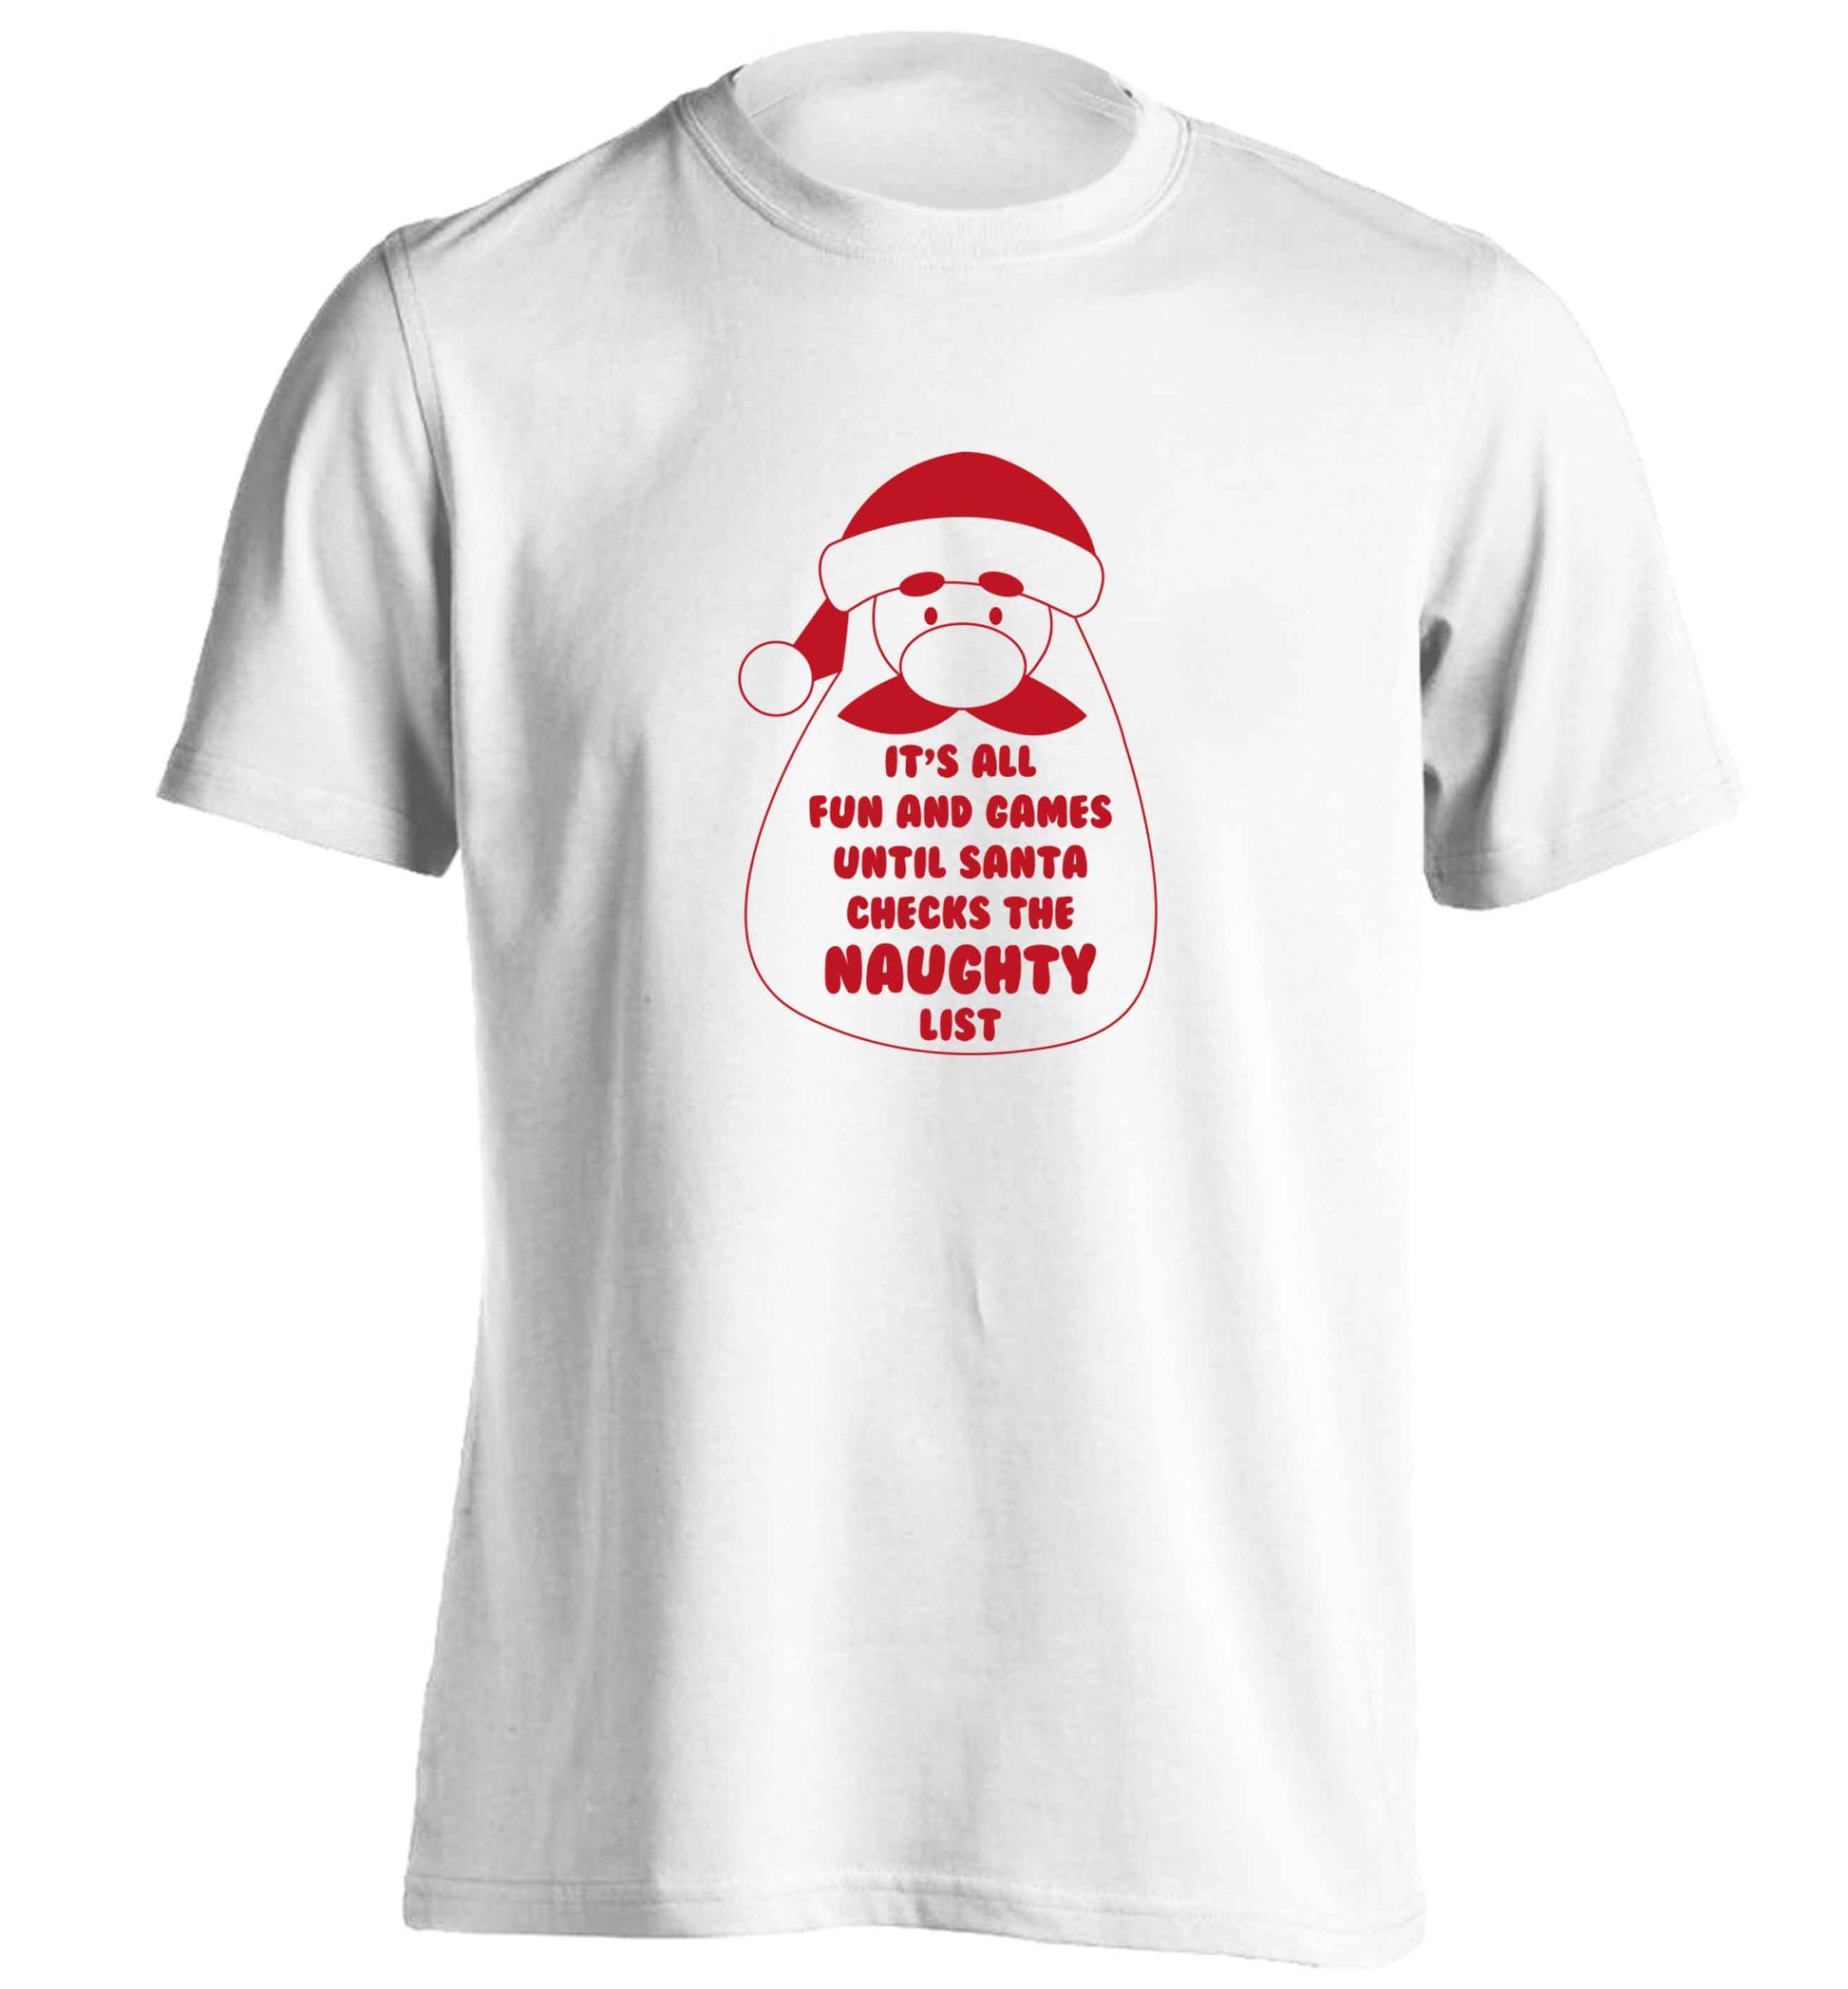 It's all fun and games until Santa checks the naughty list adults unisex white Tshirt 2XL